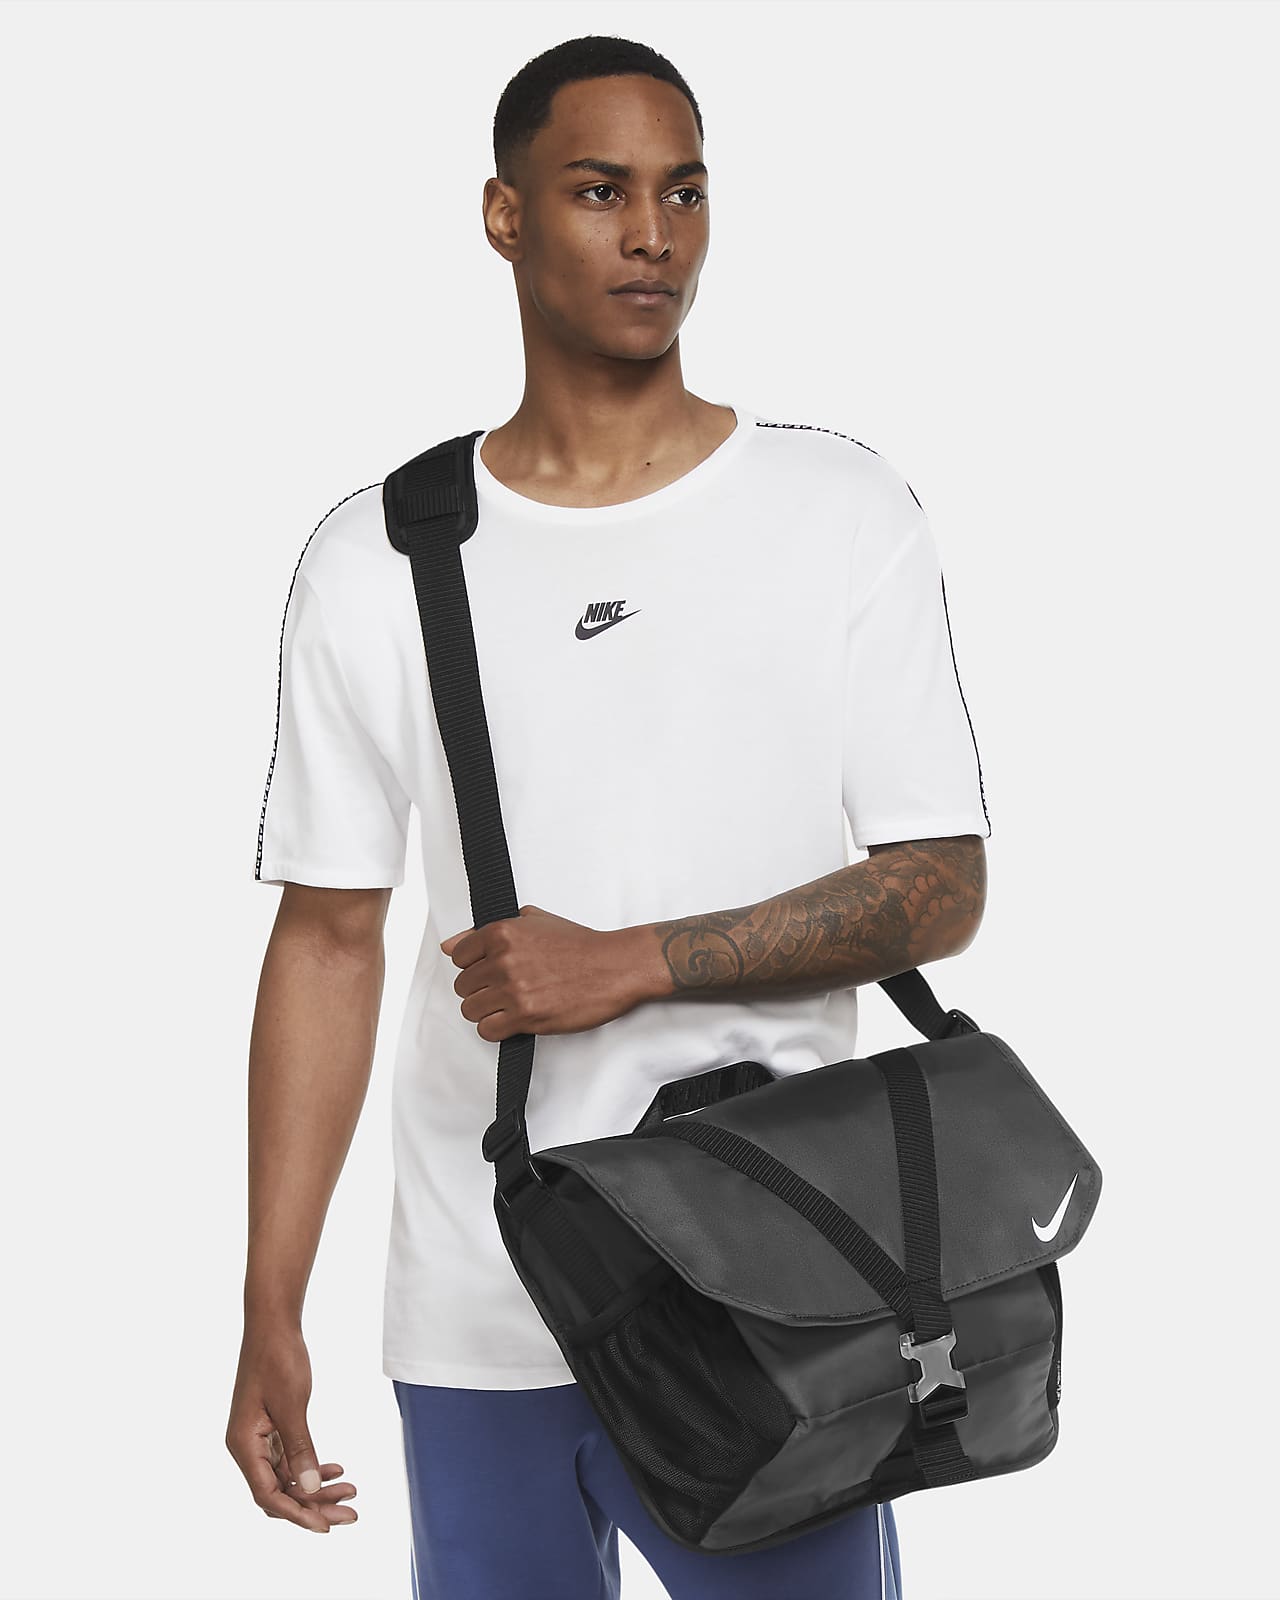 Basic theory Warship Hoist Nike Sportswear Essentials Messenger Bag (17L). Nike.com